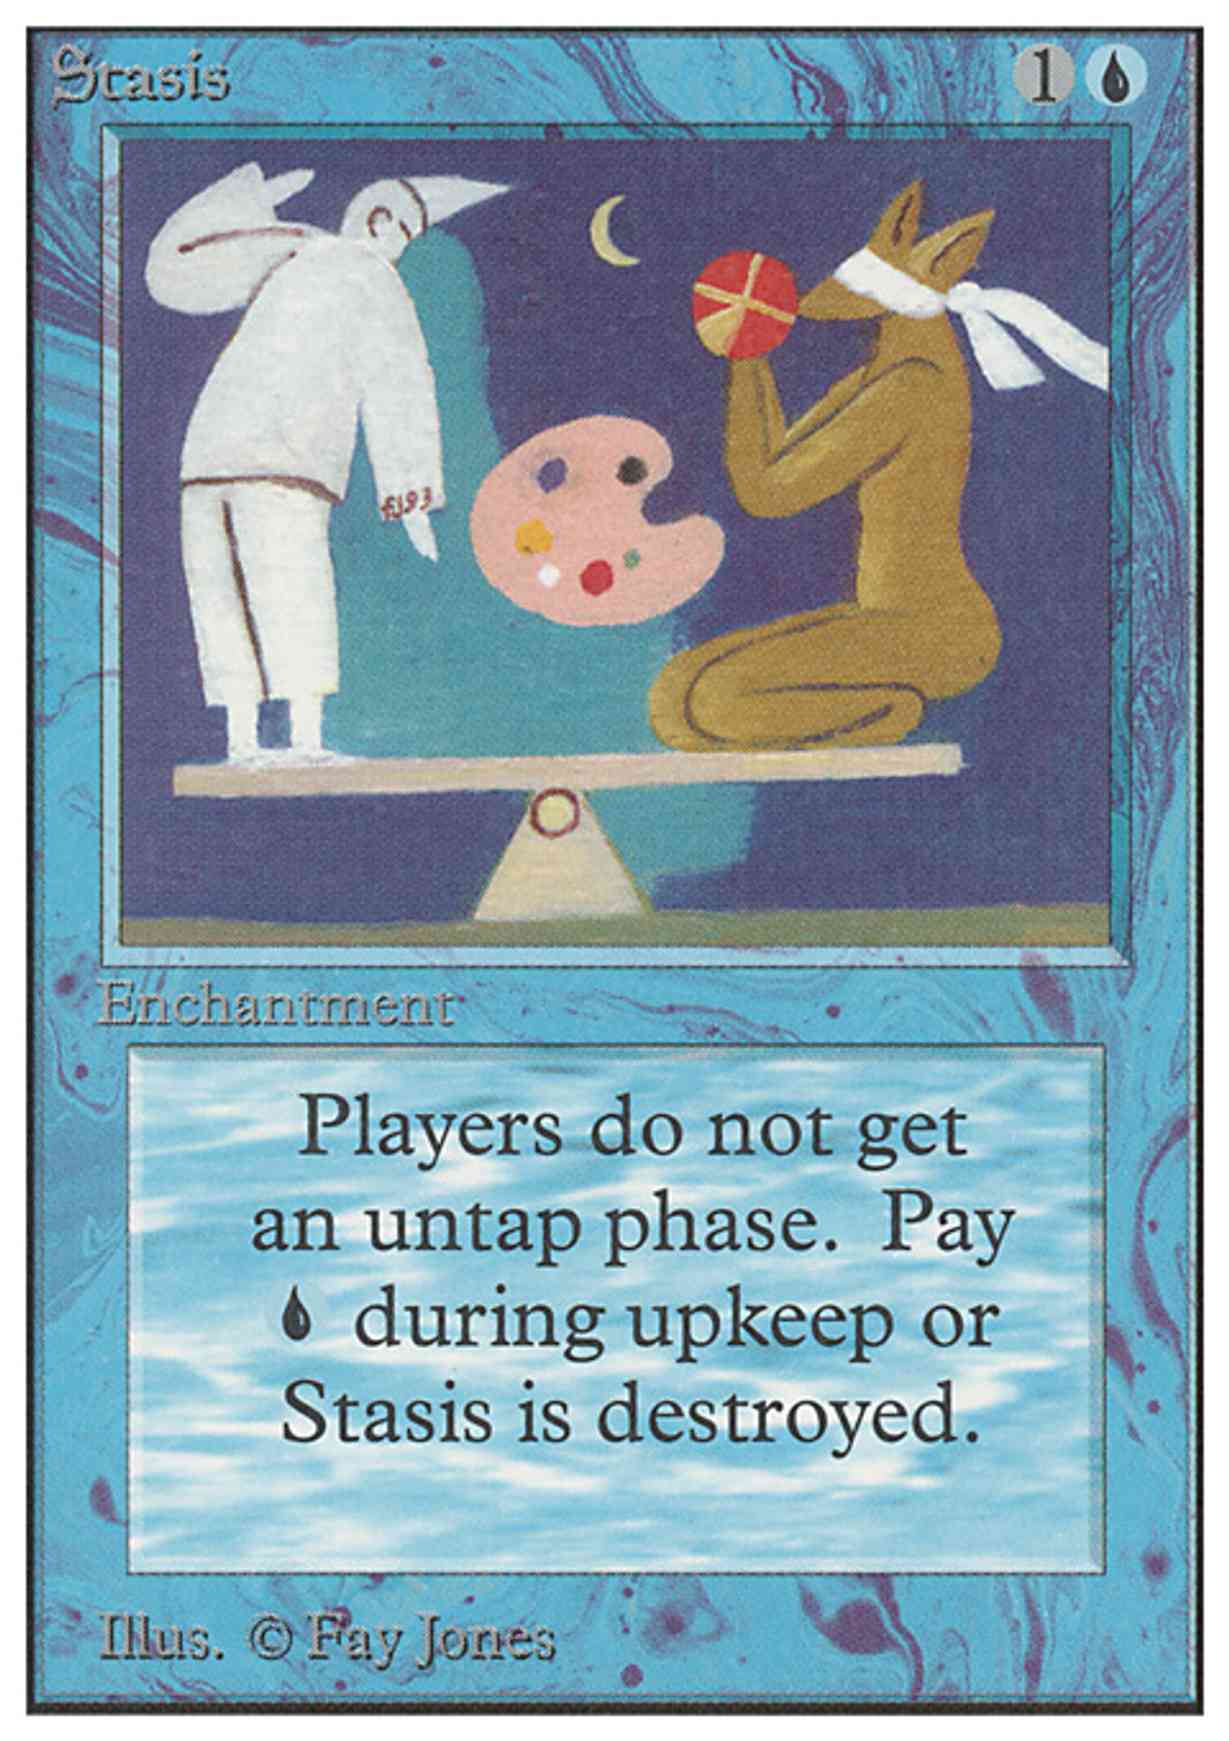 Stasis magic card front